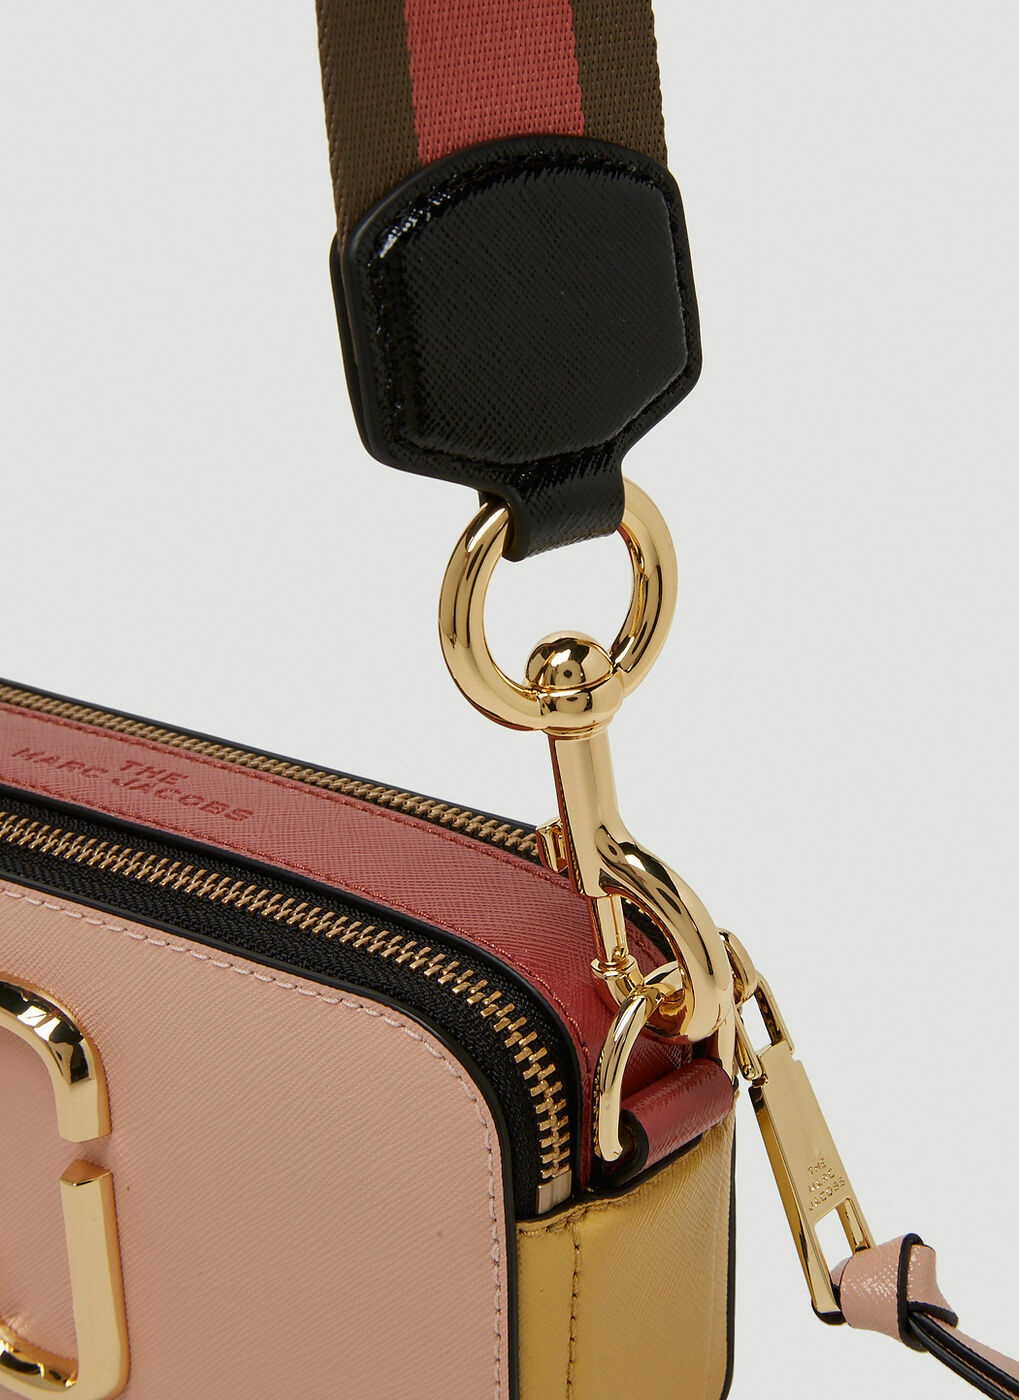 Marc Jacobs Snapshot Camera Bag - hot pink